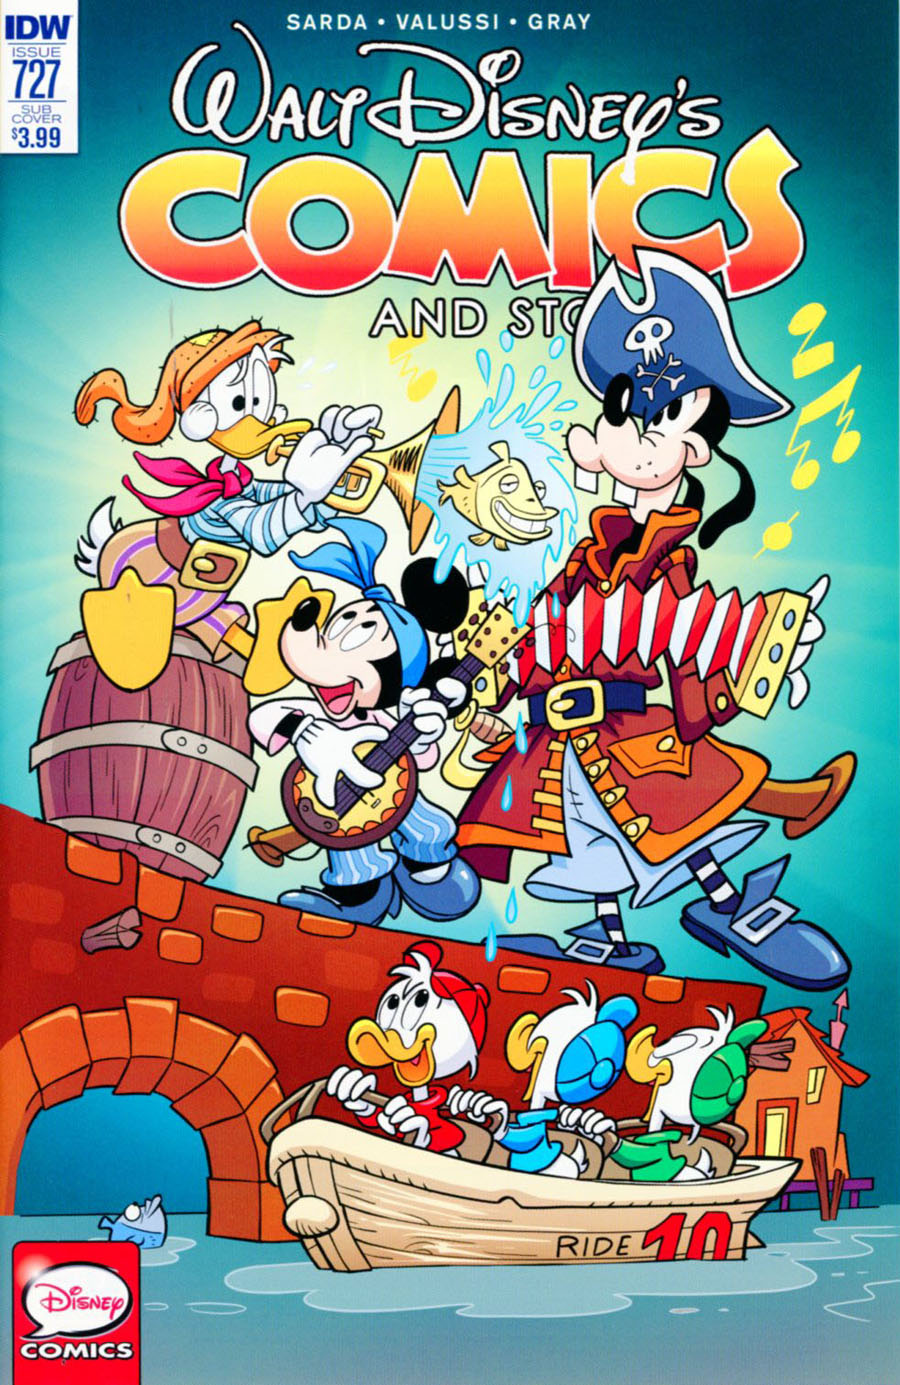 Walt Disneys Comics & Stories #727 Cover B Variant Marco Gervasio Subscription Cover